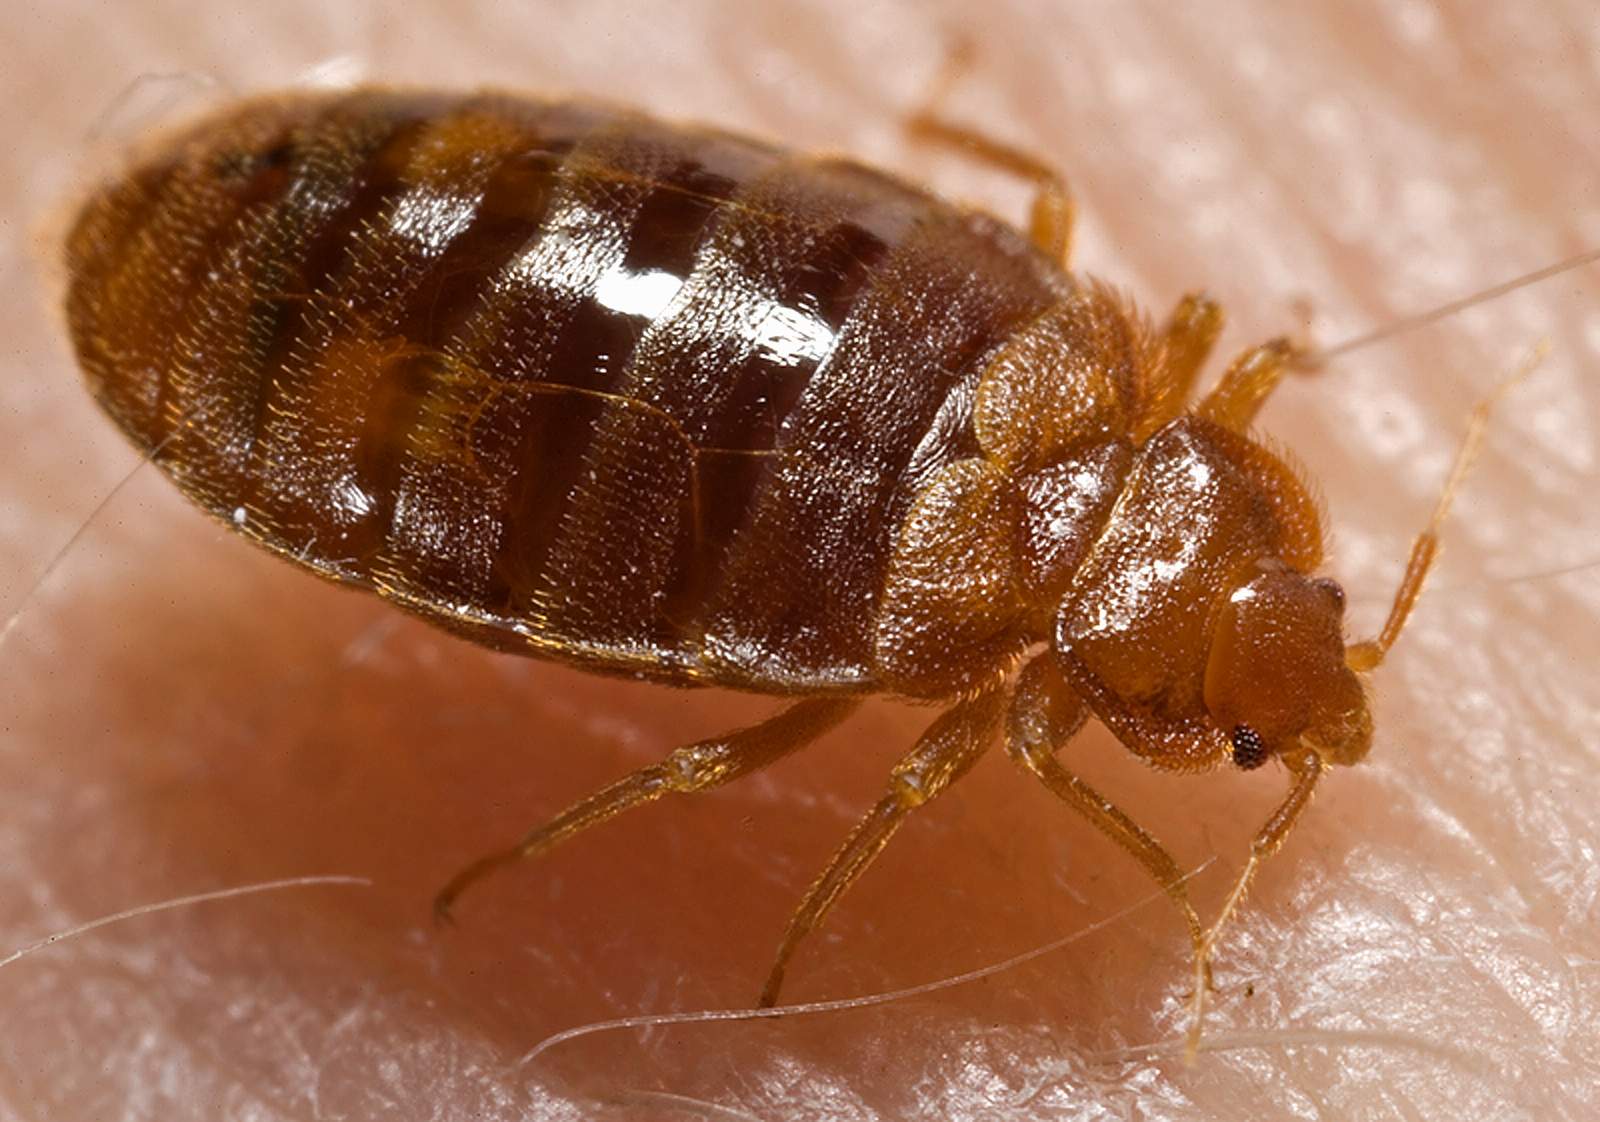 Pest Control OKC: Bed Bug Bites and treatments